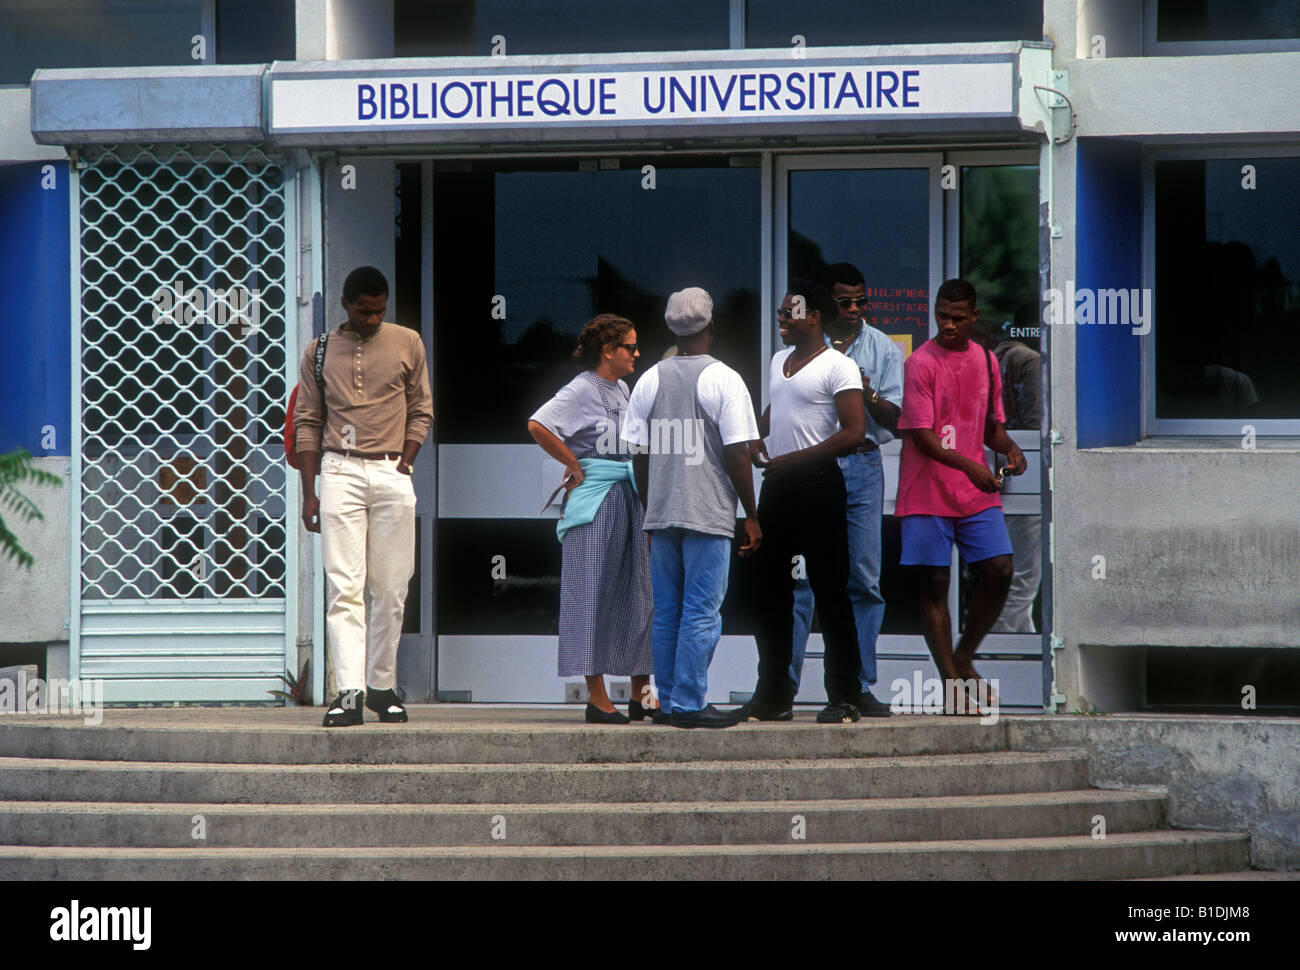 Gli studenti, biblioteca, bibliotheque universitaire, Fouillole University, Universite de Fouillole, Pointe-à-Pitre, Guadalupa Foto Stock